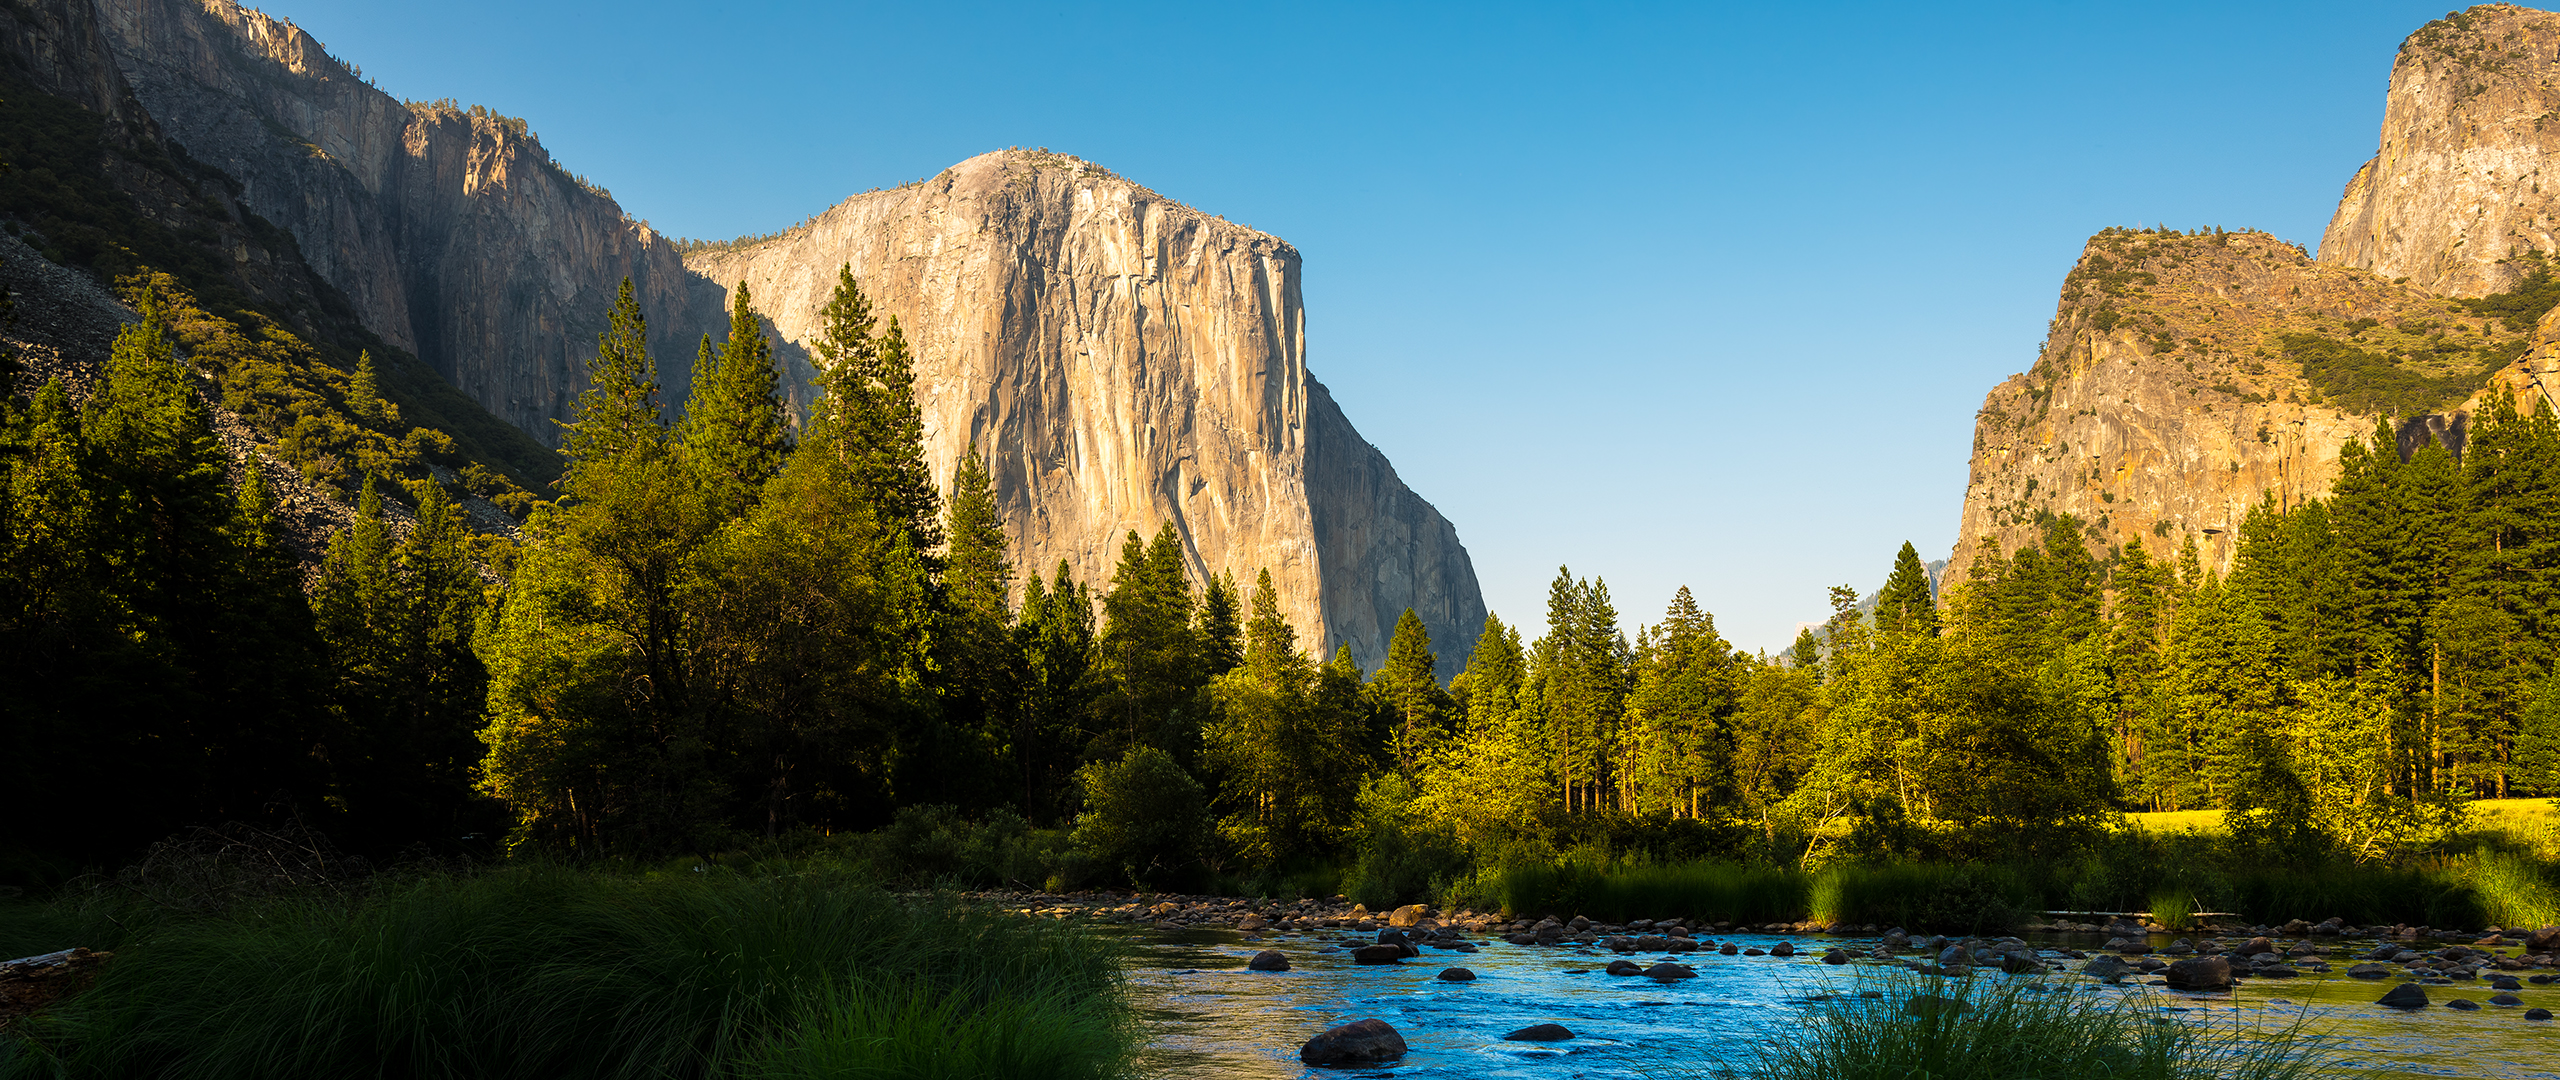 Yosemite National Park, El Capitan - 2560x1080 Wallpaper 